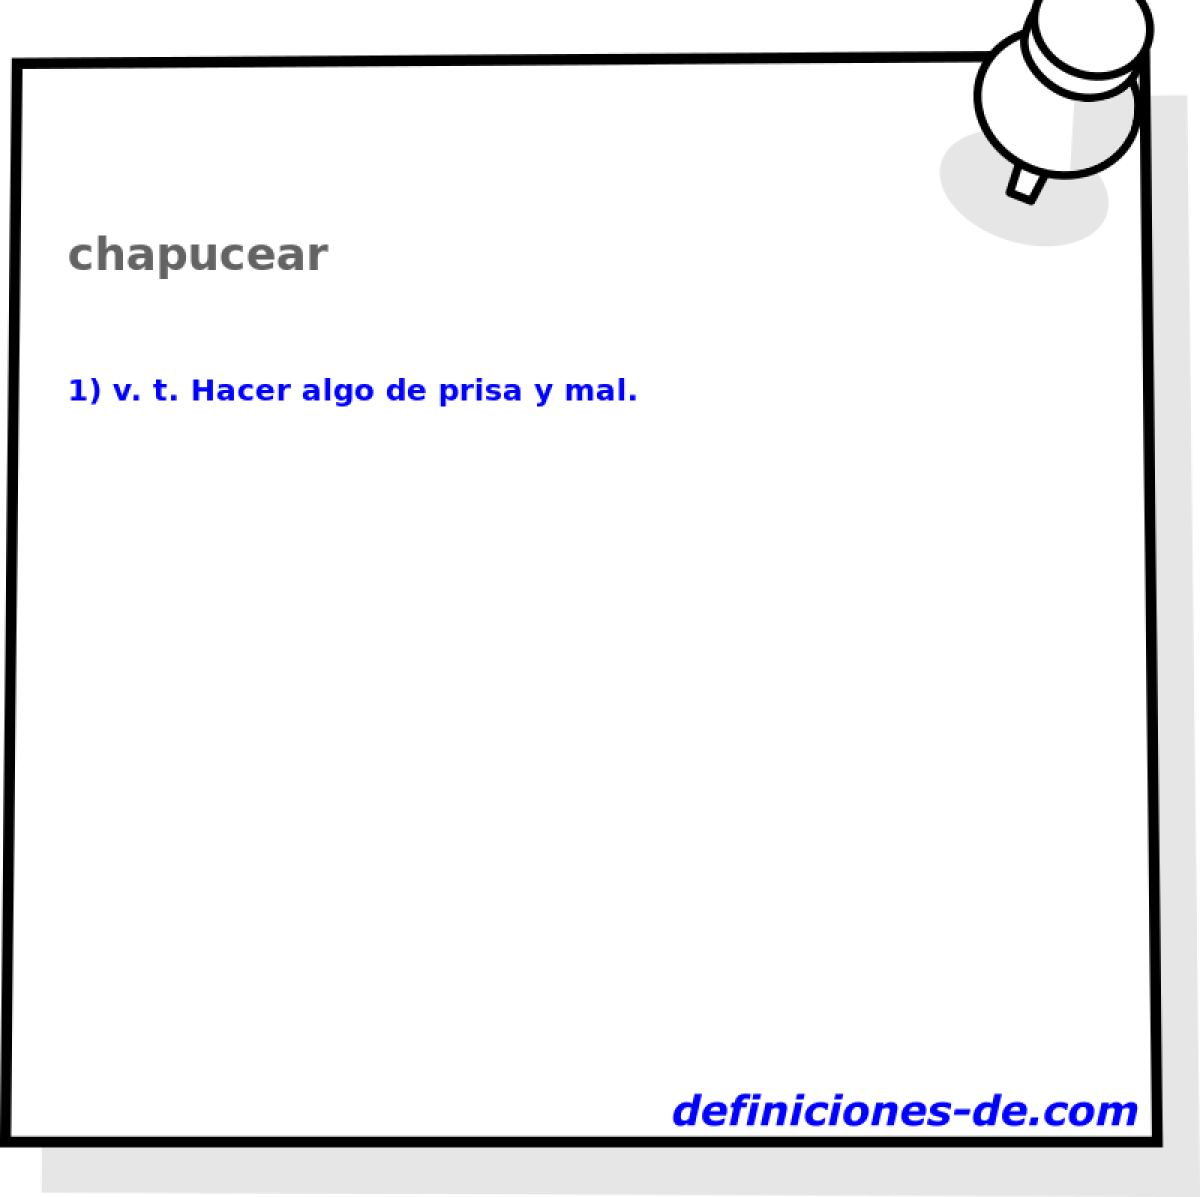 chapucear 